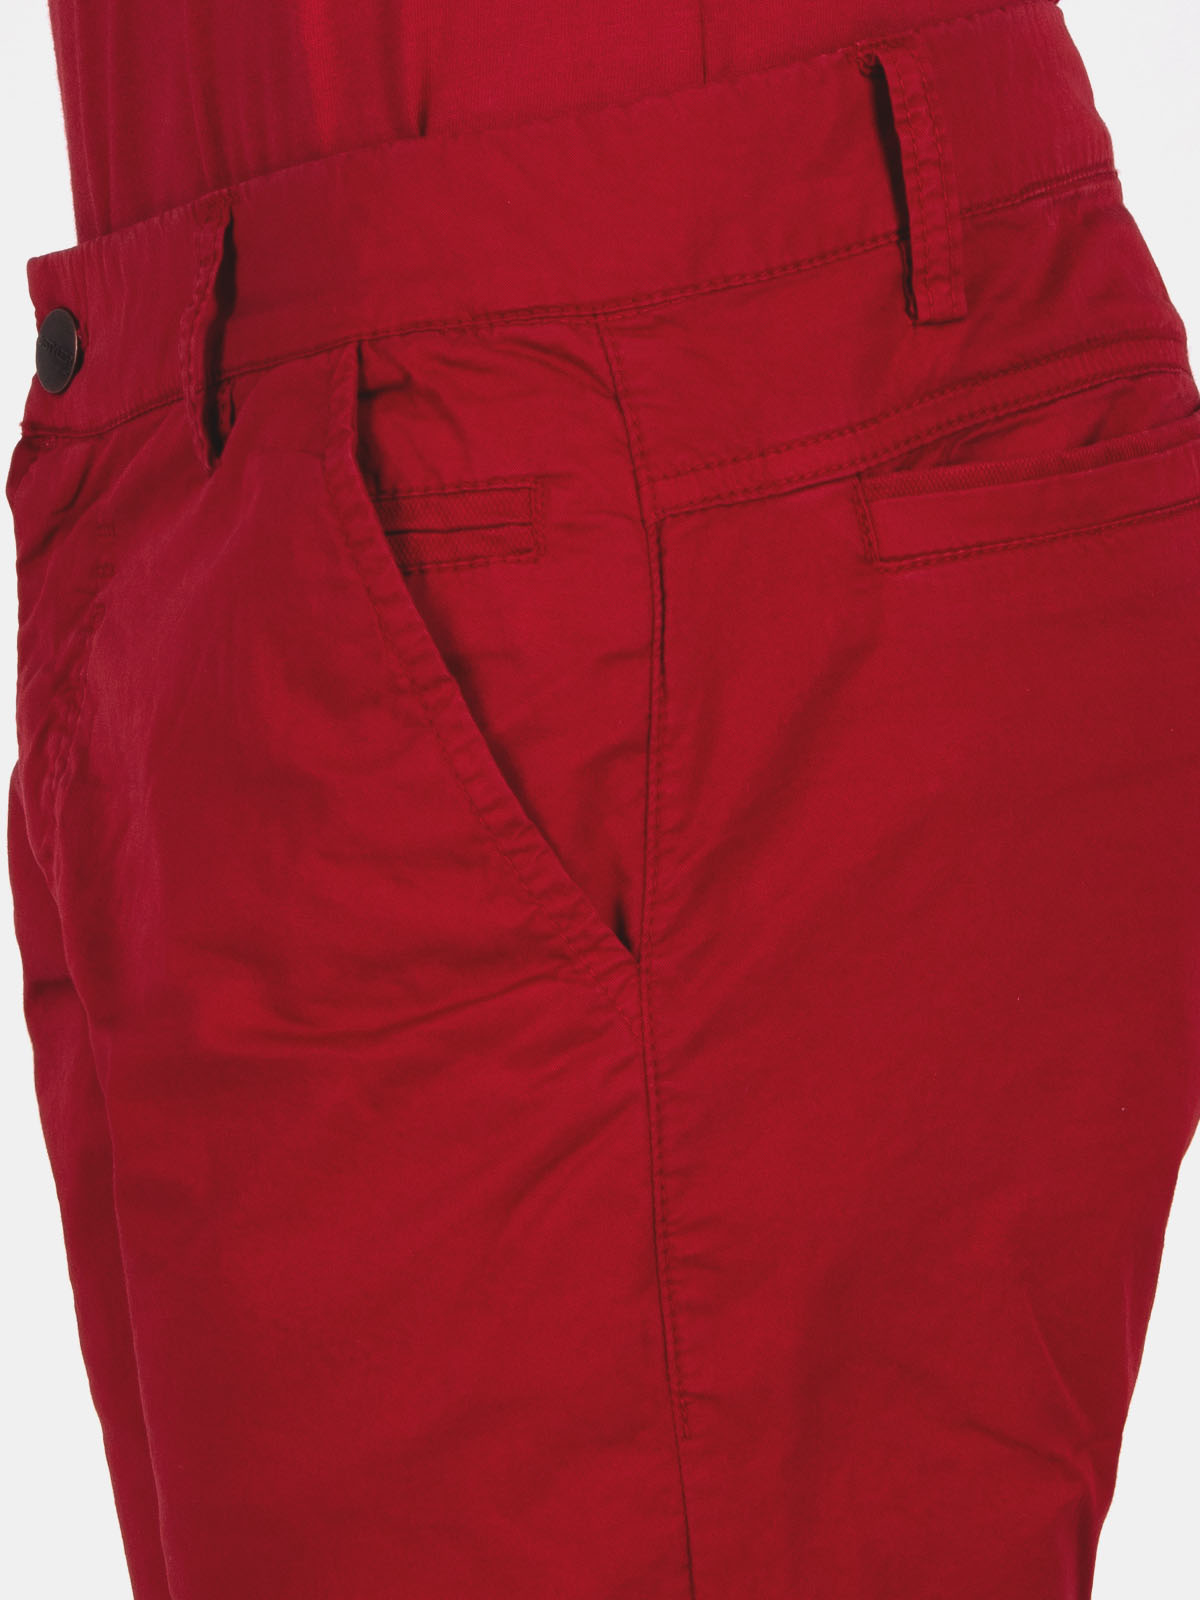  pantaloni scurți roșii  - 67062 € 27.00 img4